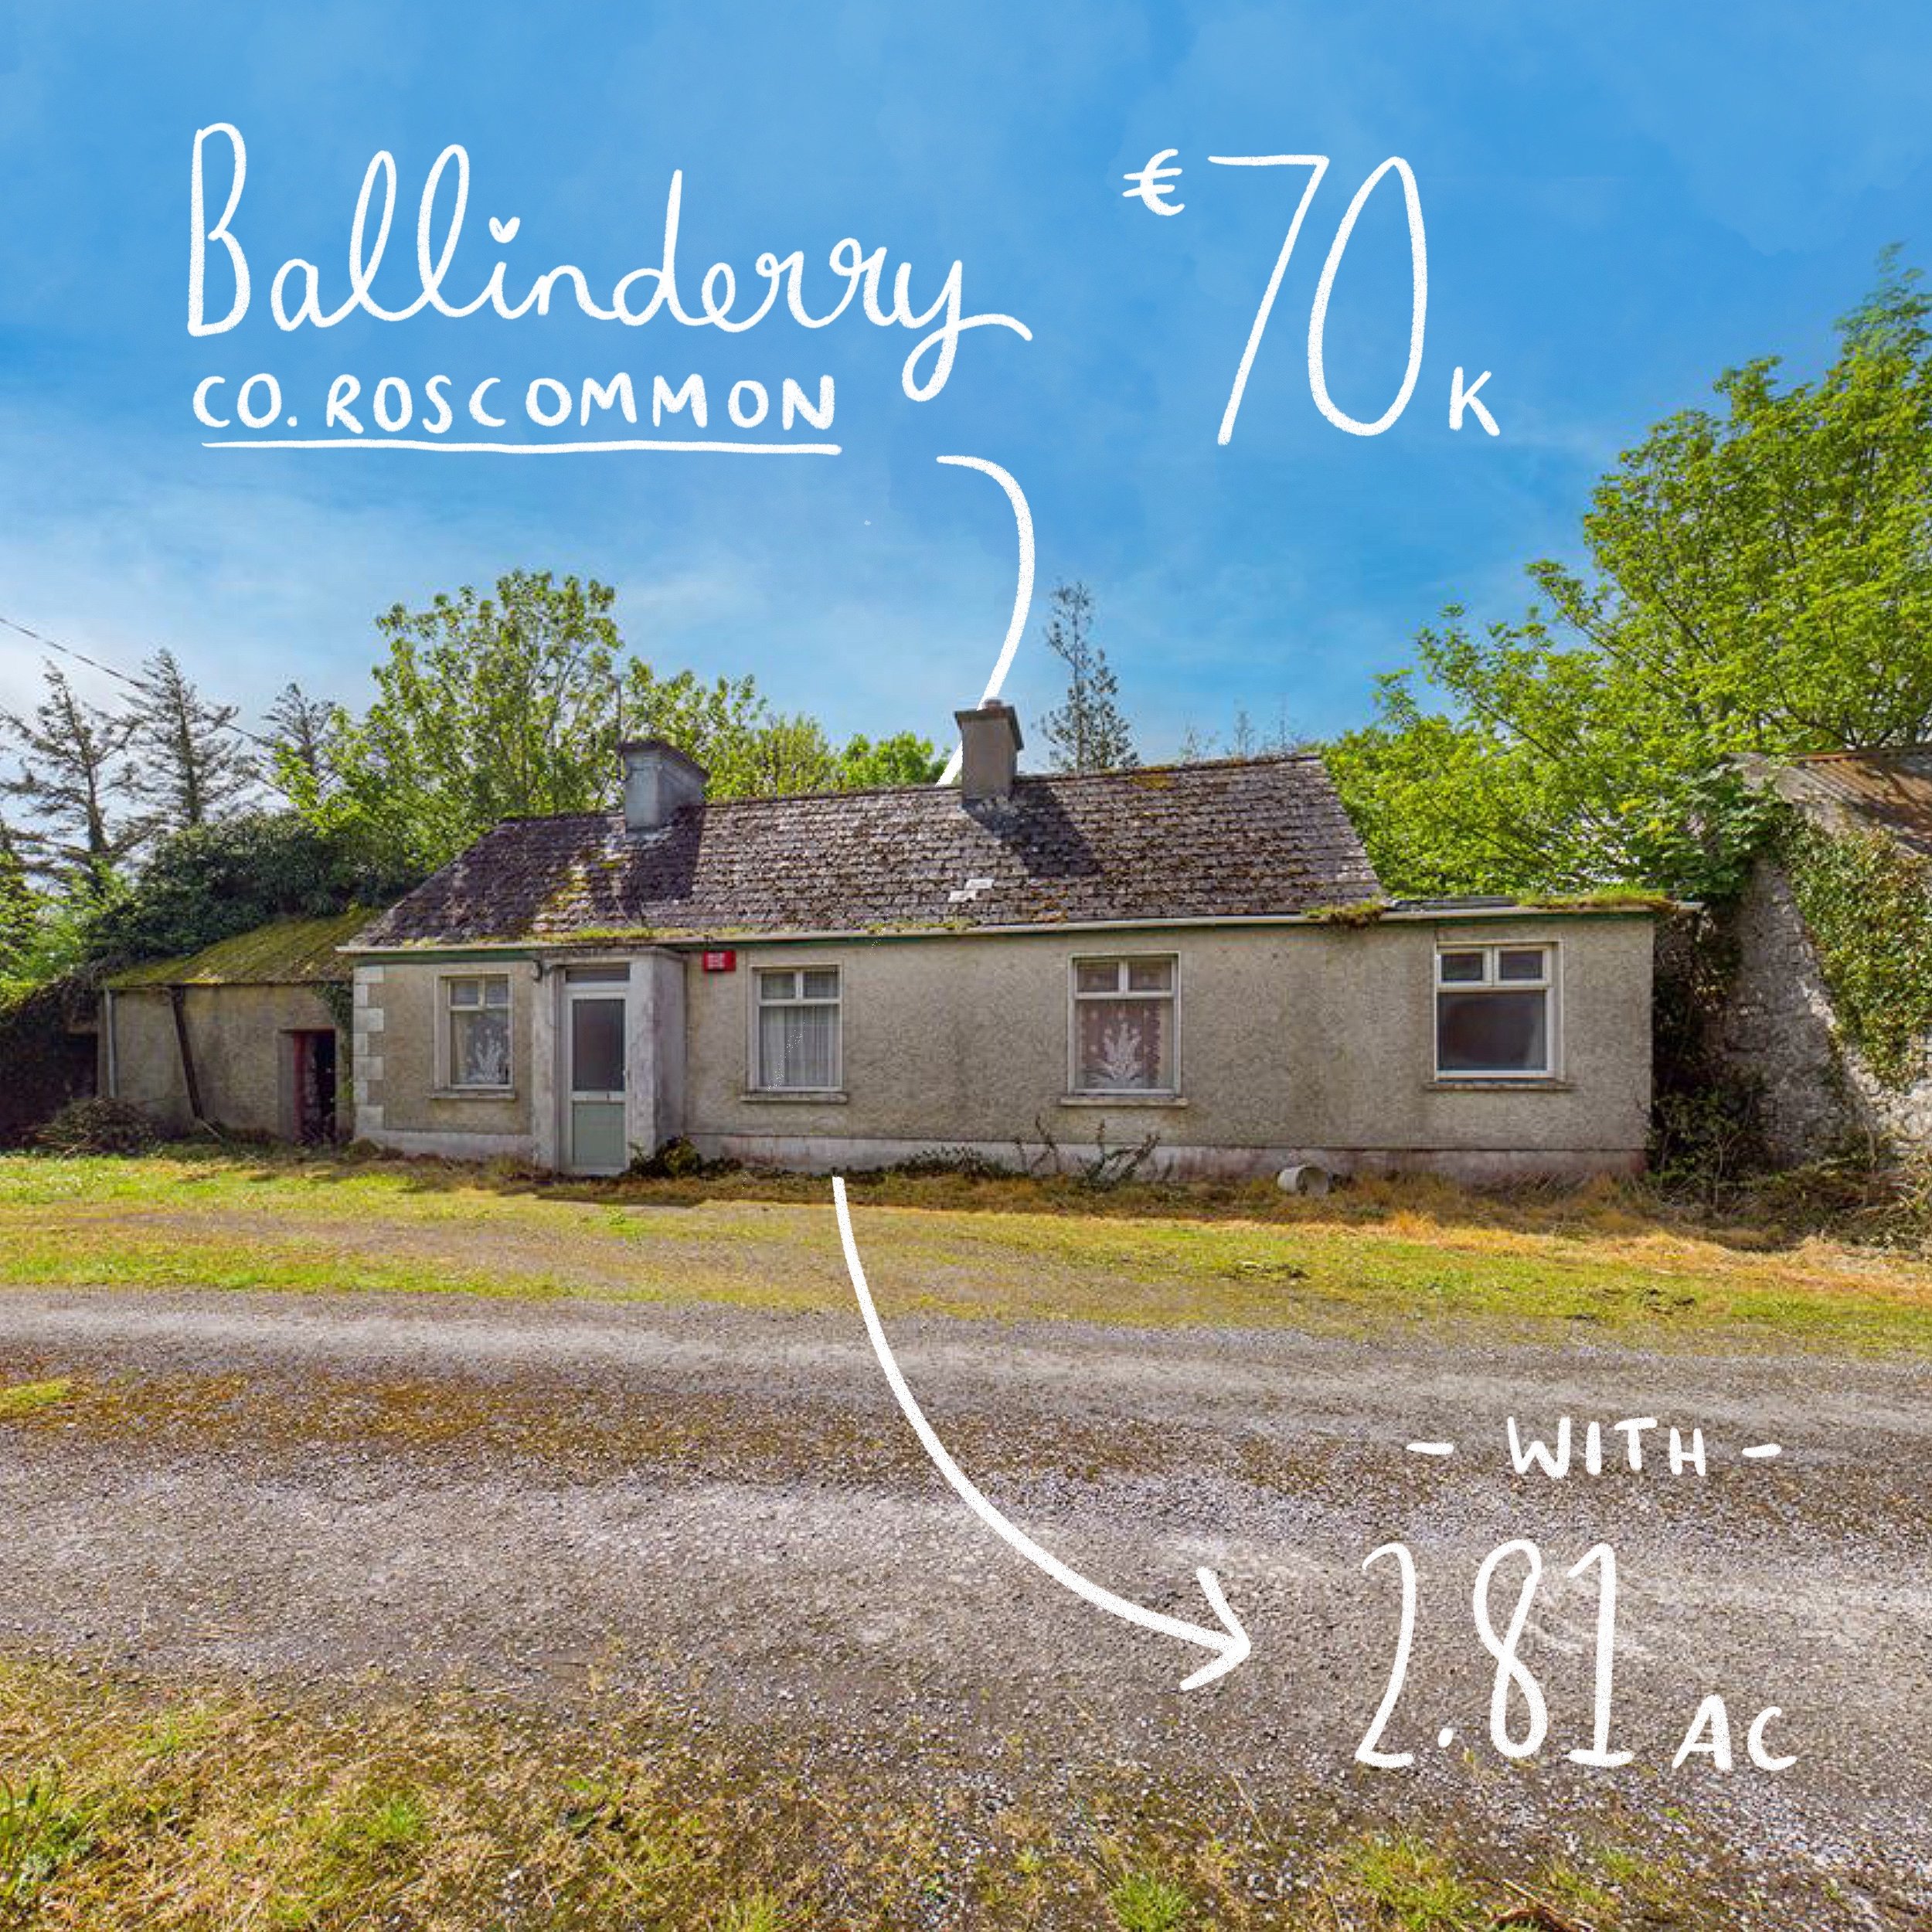 Ballinderry, Four Mile House, Co. Roscommon. €70k